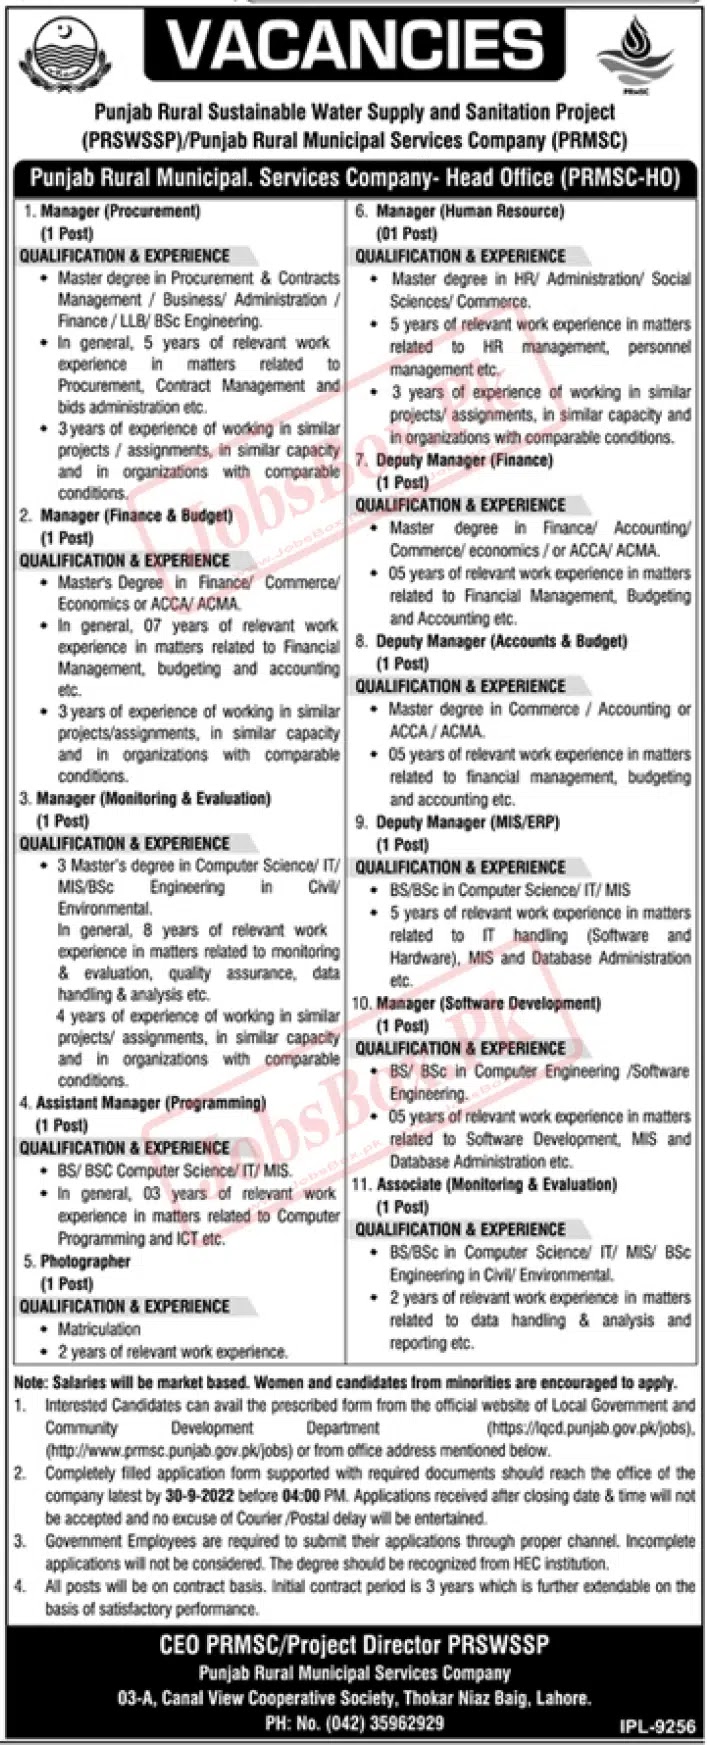 Punjab Rural Municipal Services Company Jobs 2022 - PRMSC Jobs 2022 - https://lgcd.punjab.gov.pk/jobs - http://www.prmsc.punjab.gov.pk/jobs